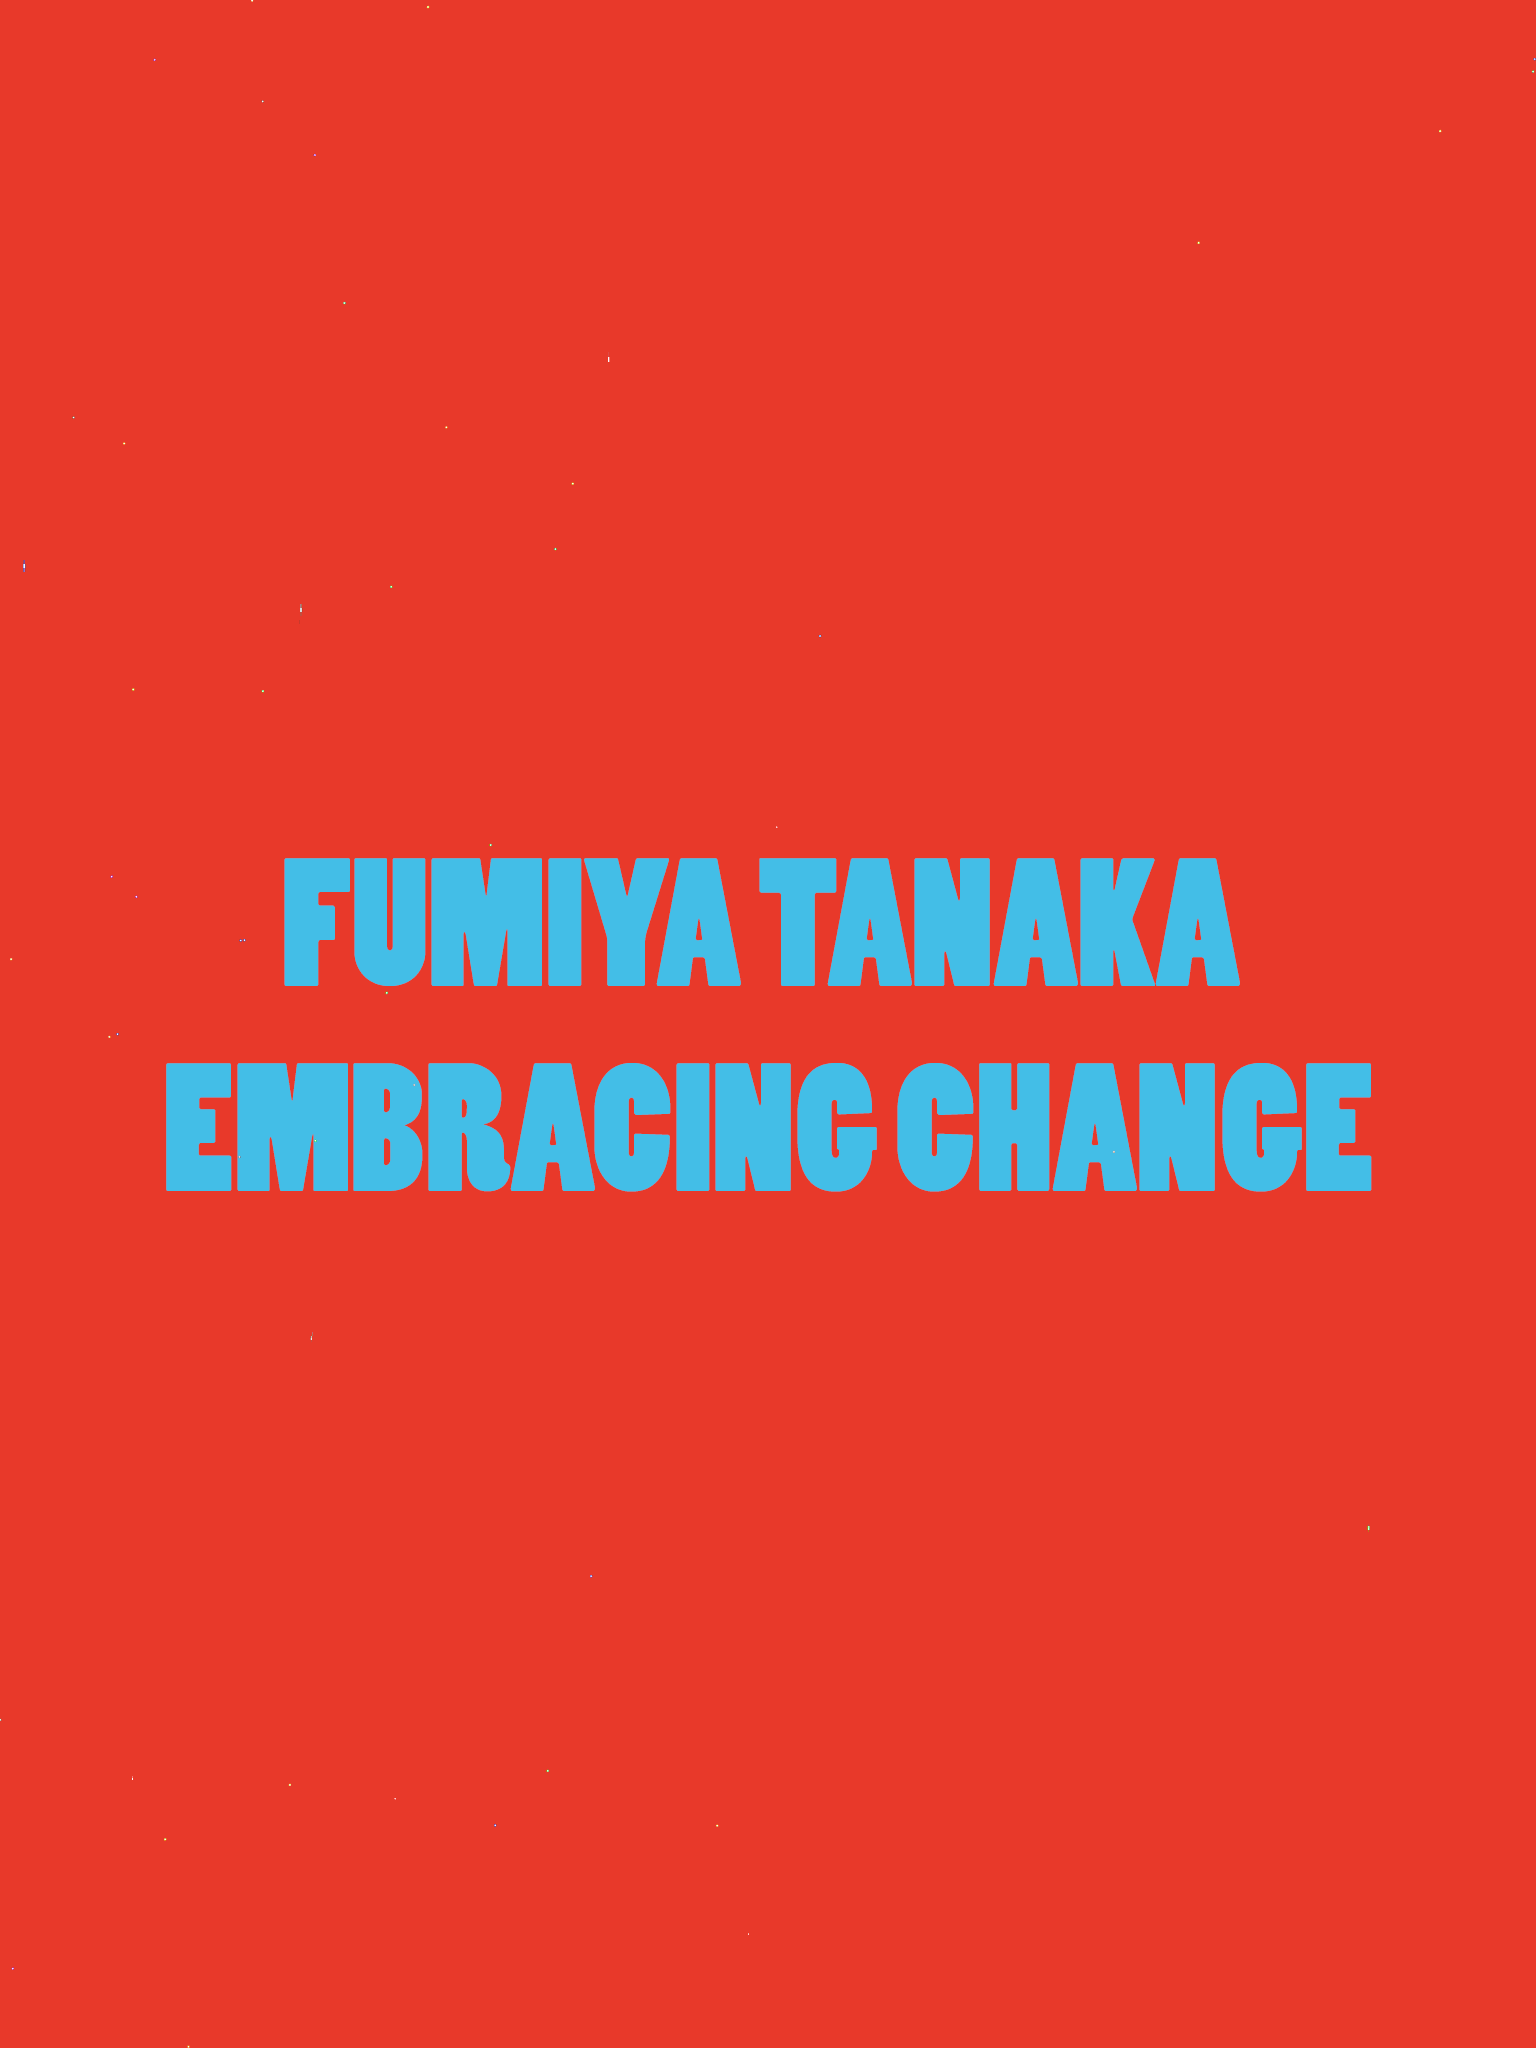 Fumiya Tanaka on embracing change, in music and in life